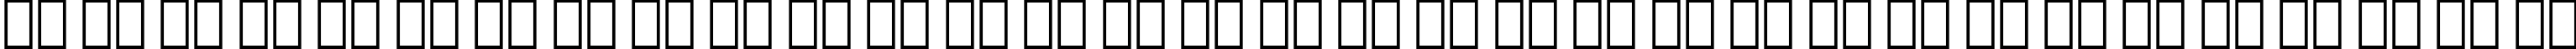 Пример написания русского алфавита шрифтом Bodoni Bold Condensed BT